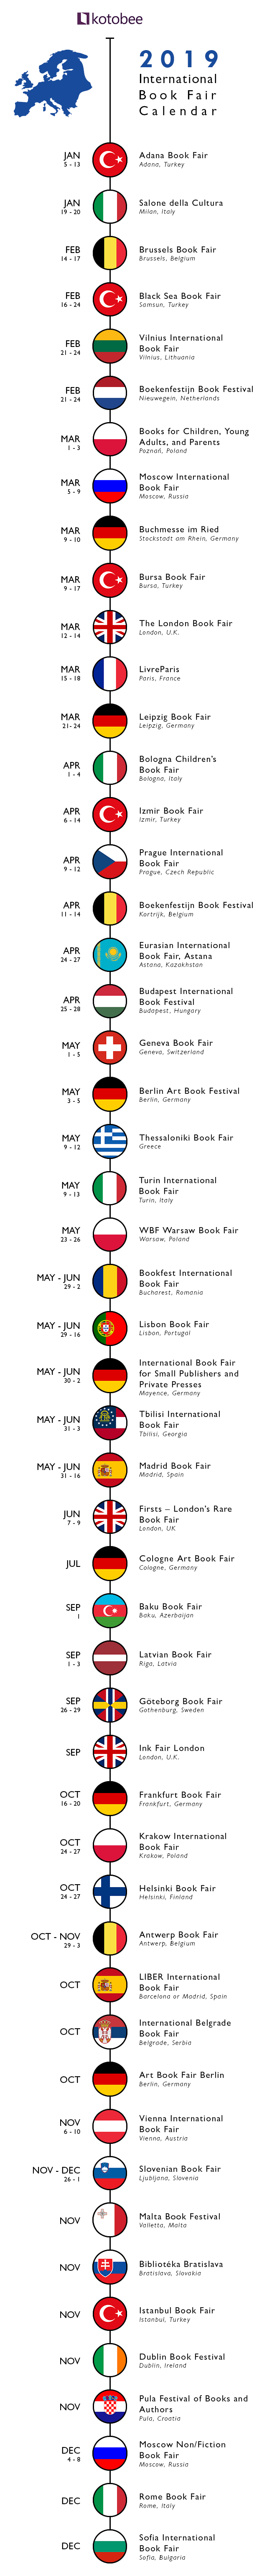 kotobee book fairs